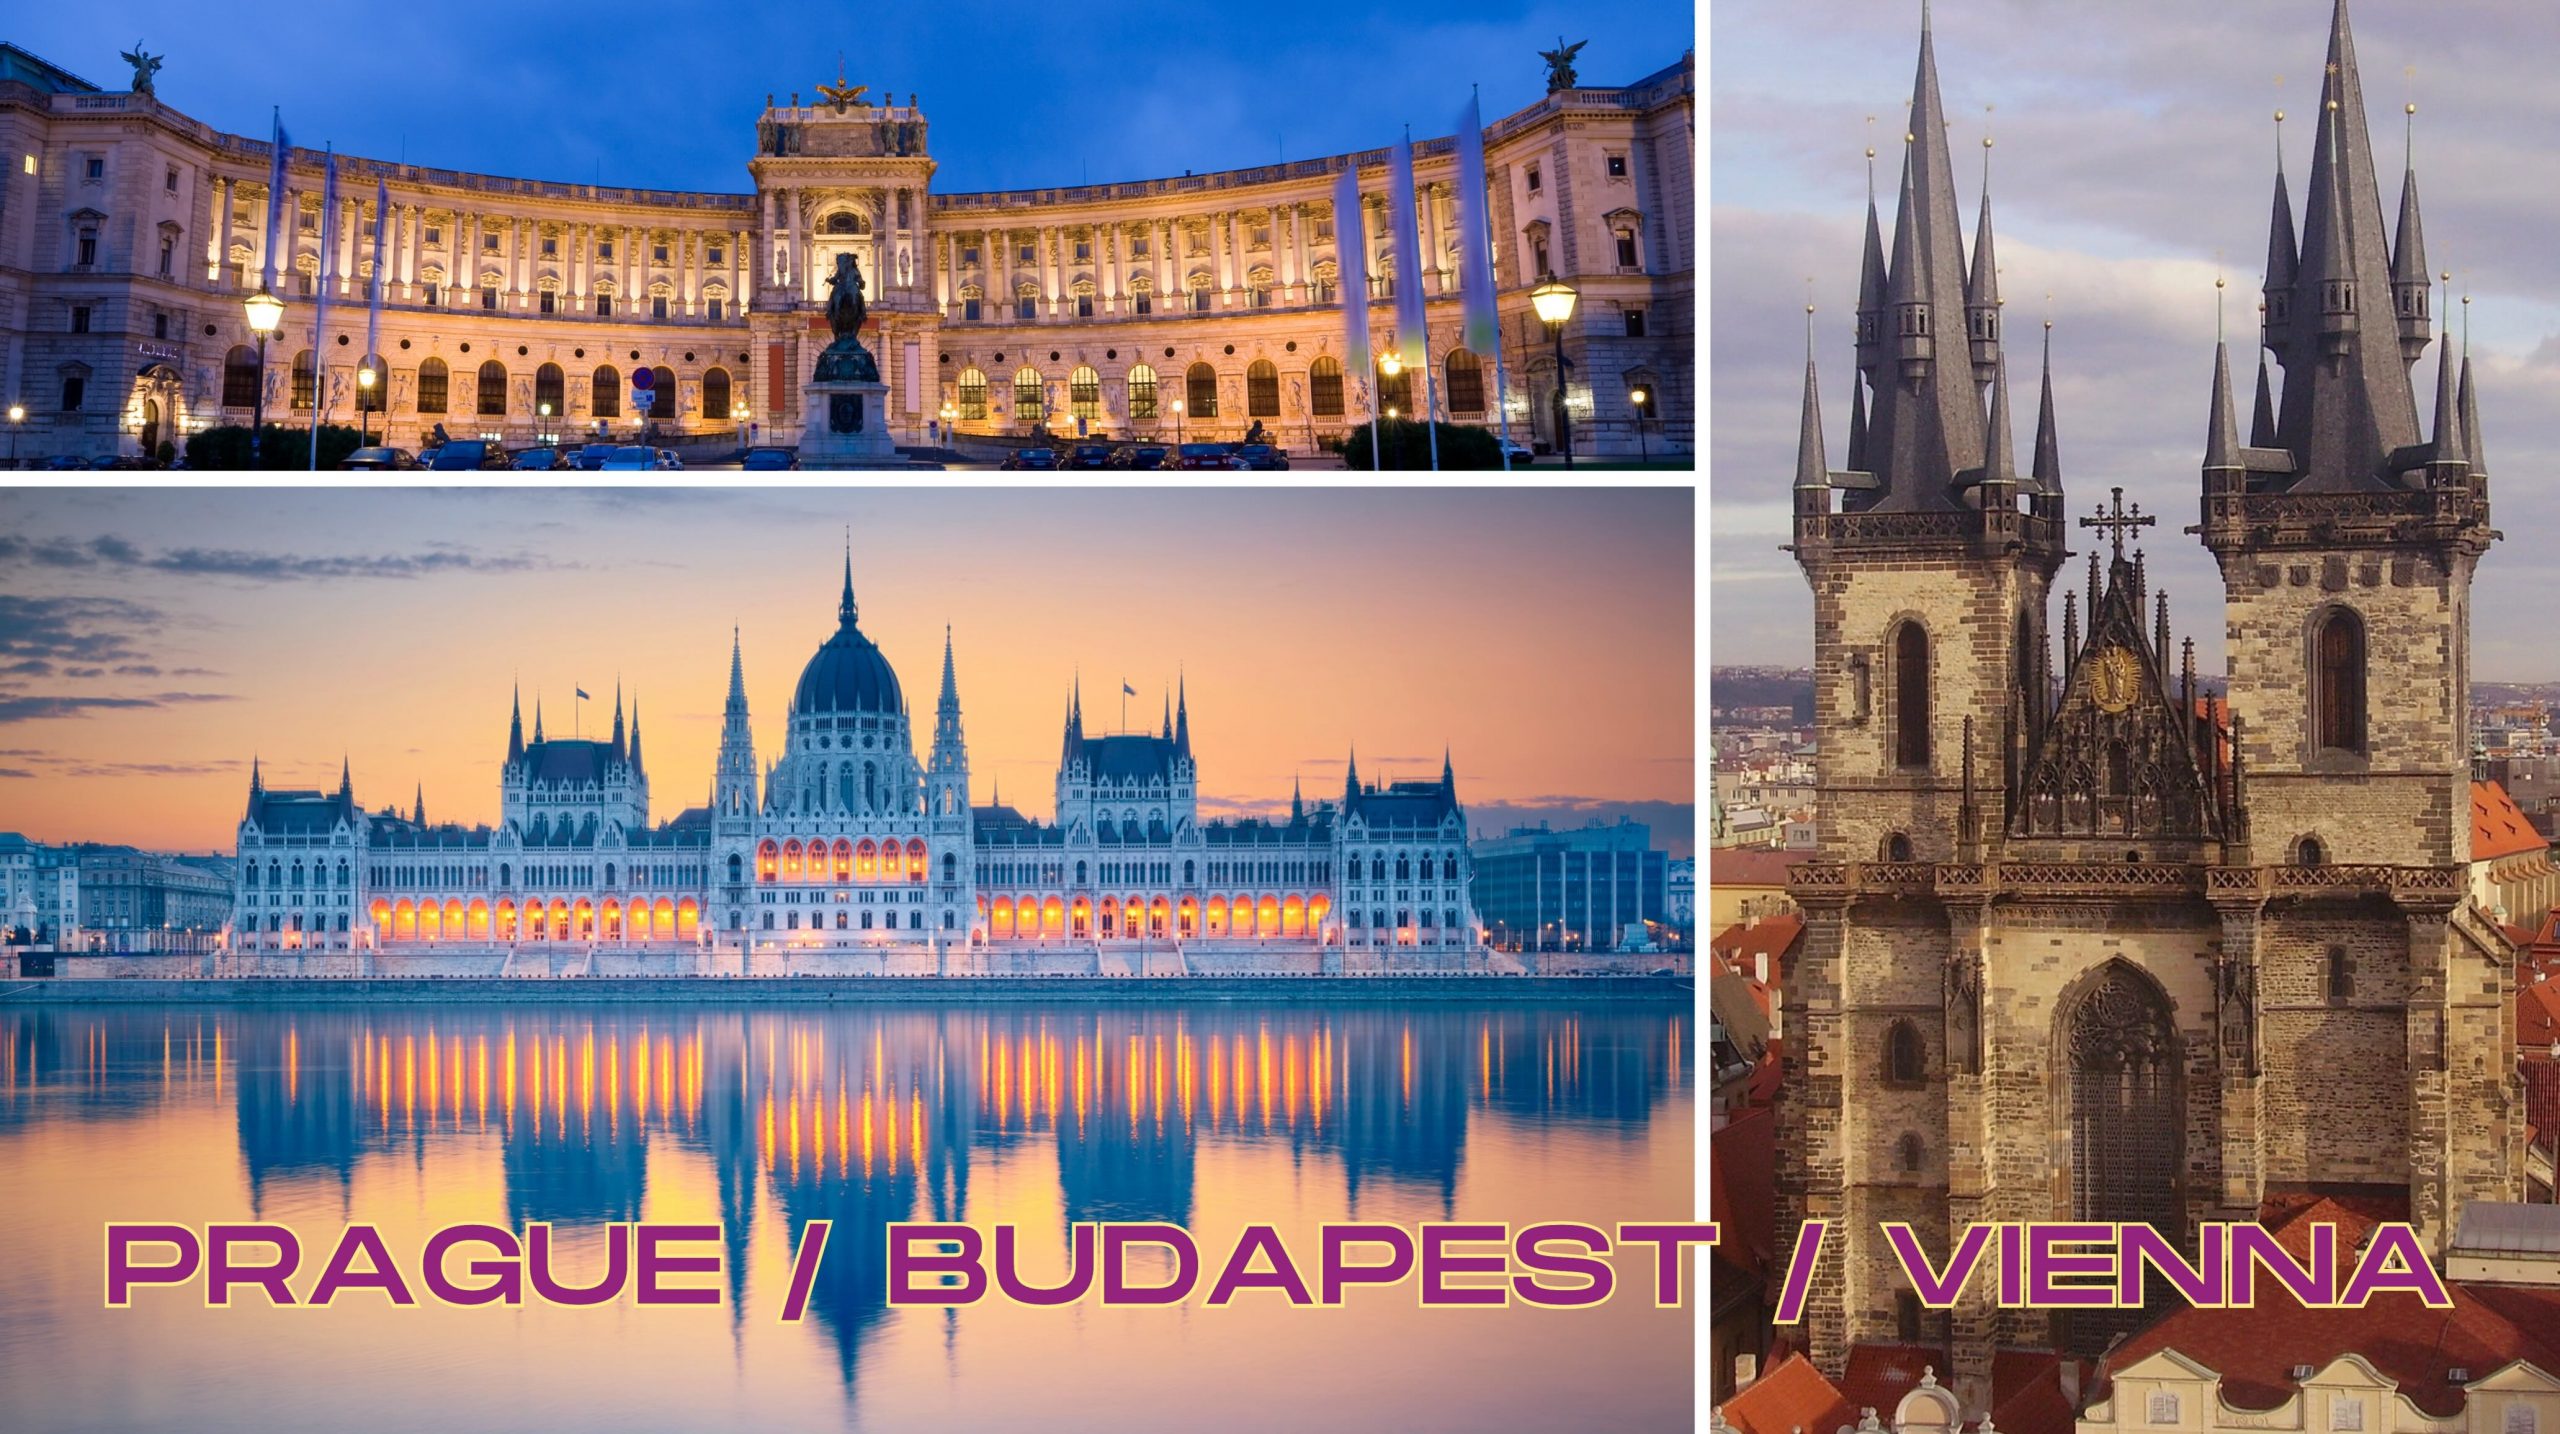 Historic European multi-centre, visiting Prague, Budapest & Vienna